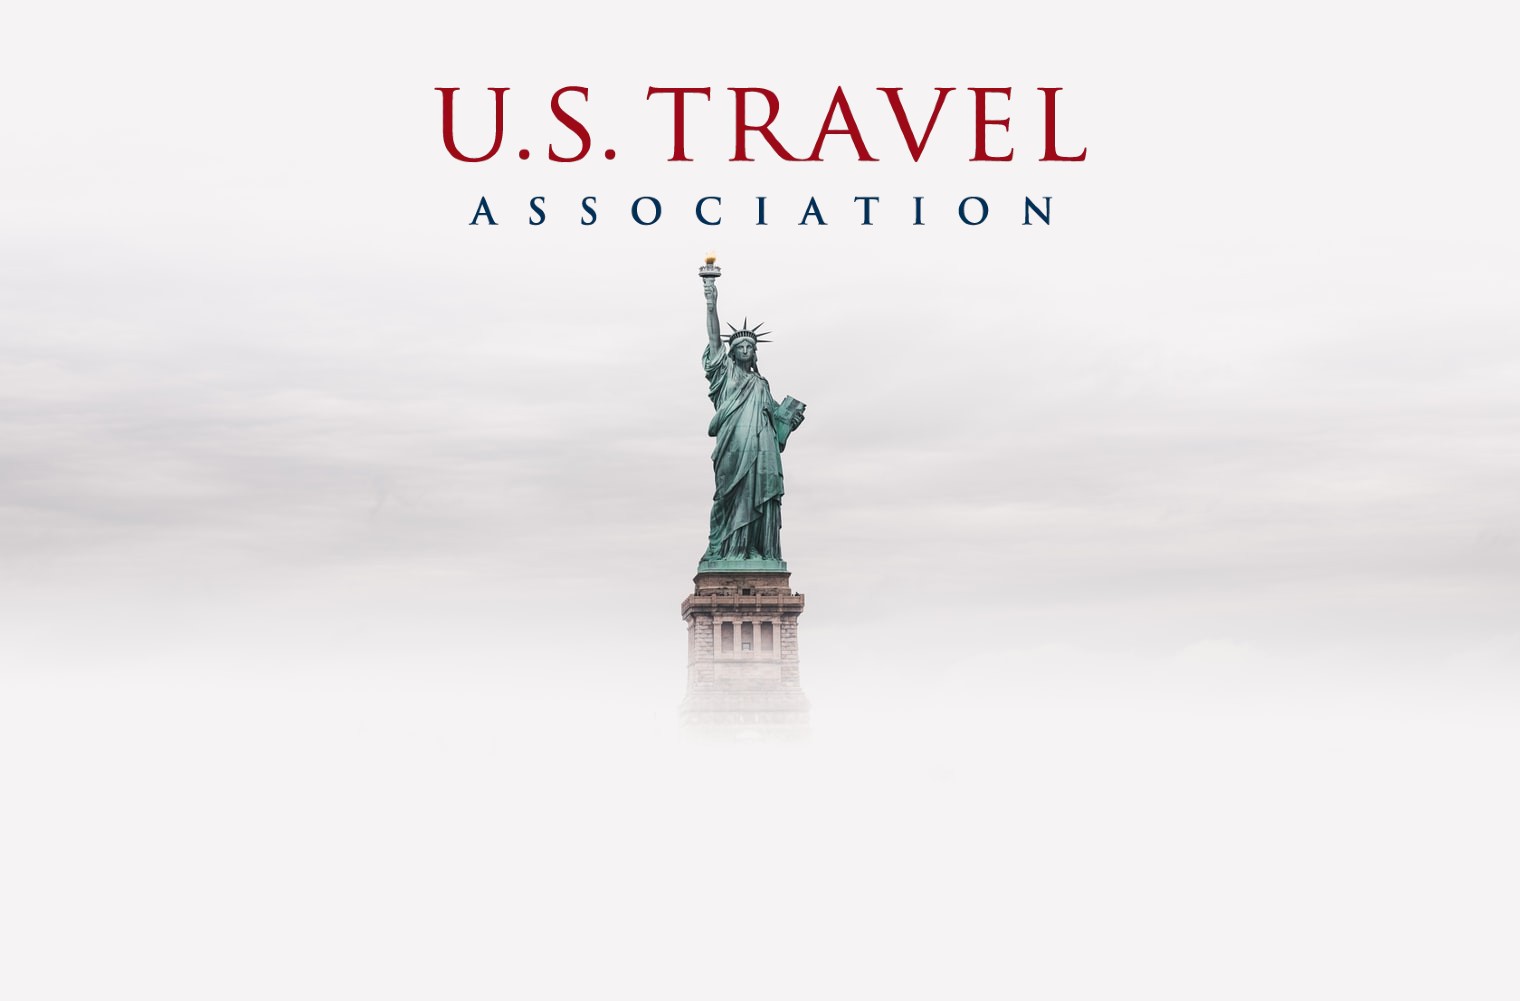 U.S. Travel Association logo, the Statue of Liberty